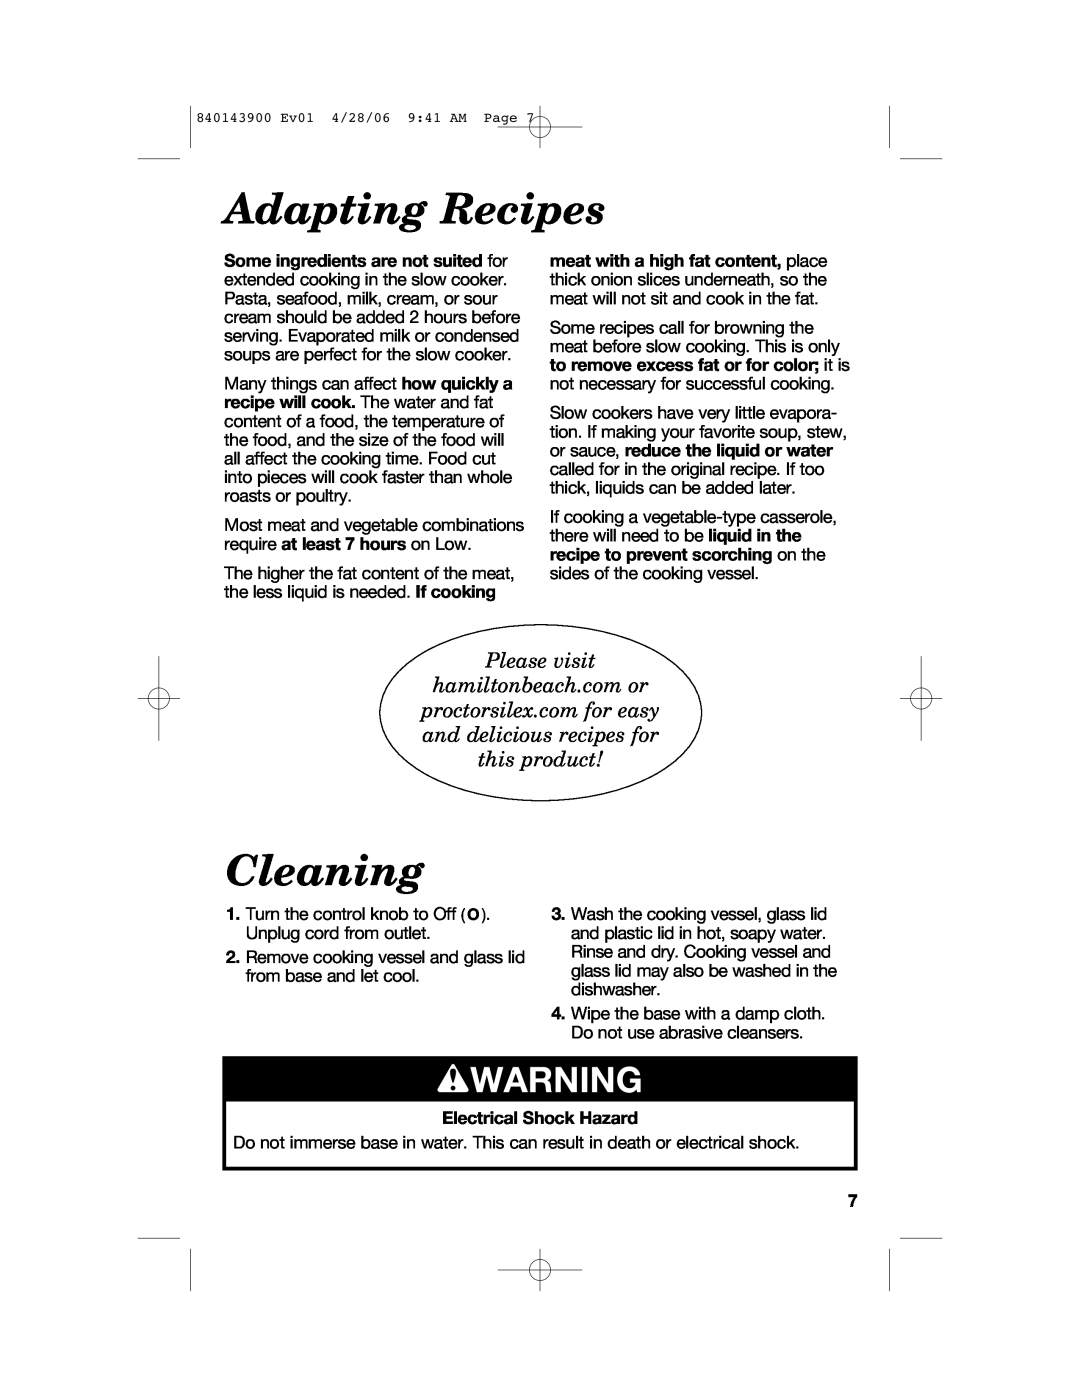 Hamilton Beach 840143900 manual Adapting Recipes, Cleaning, Electrical Shock Hazard, wWARNING, Please visit 